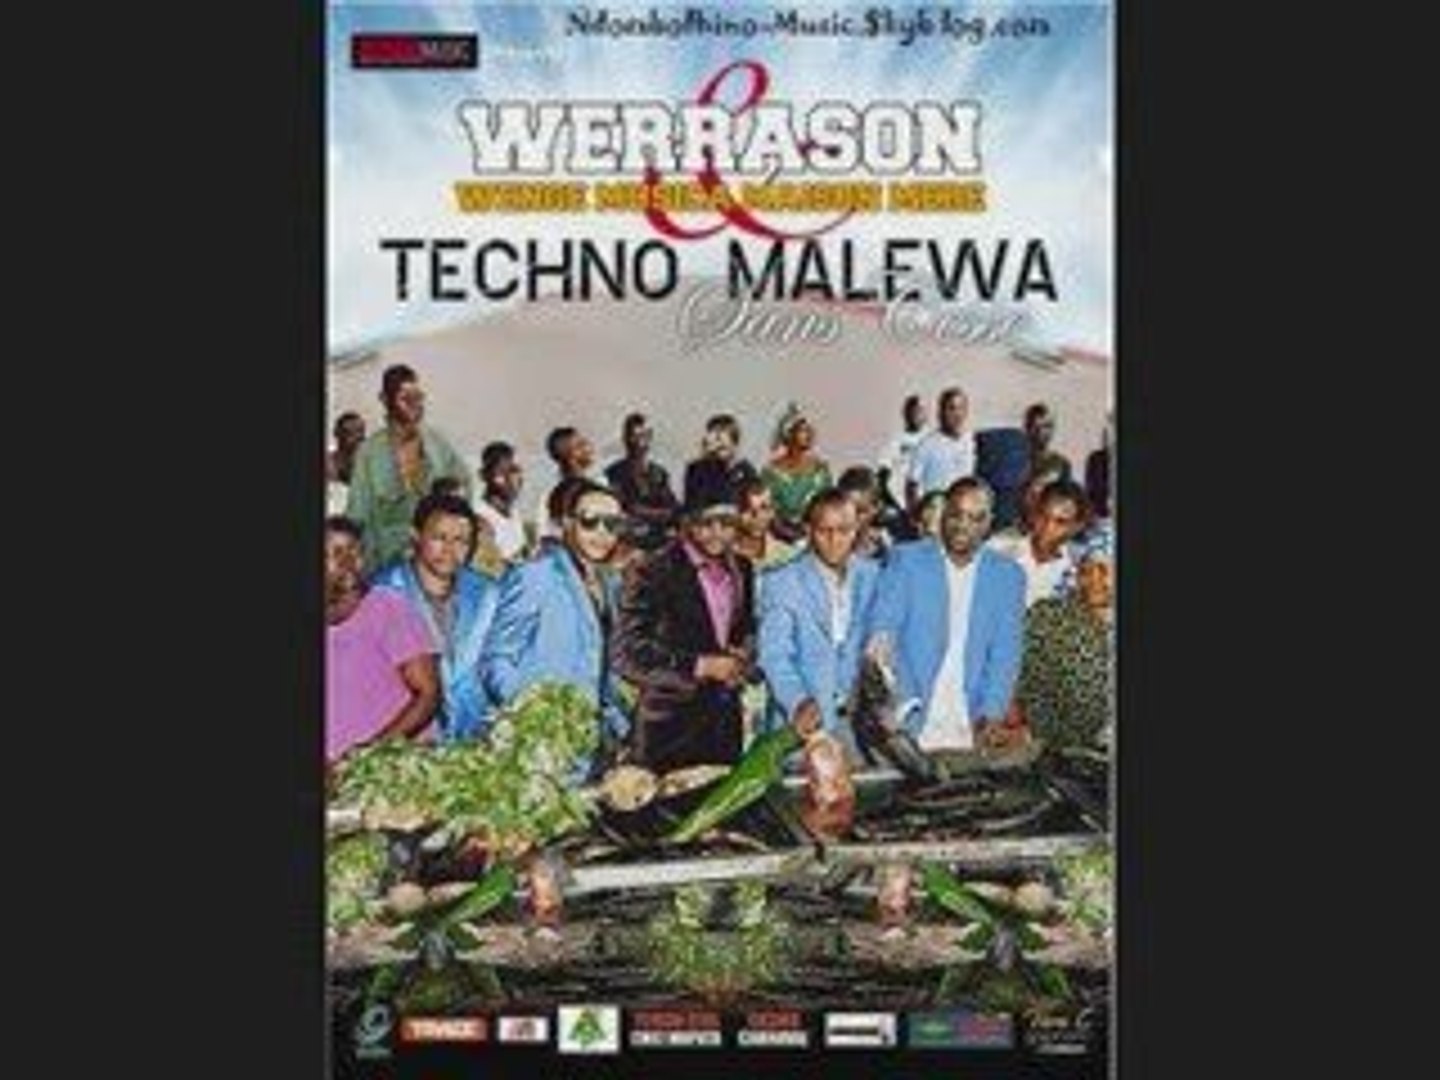 Techno malewa, vol. 1 : sans cesse - Album by Werrason